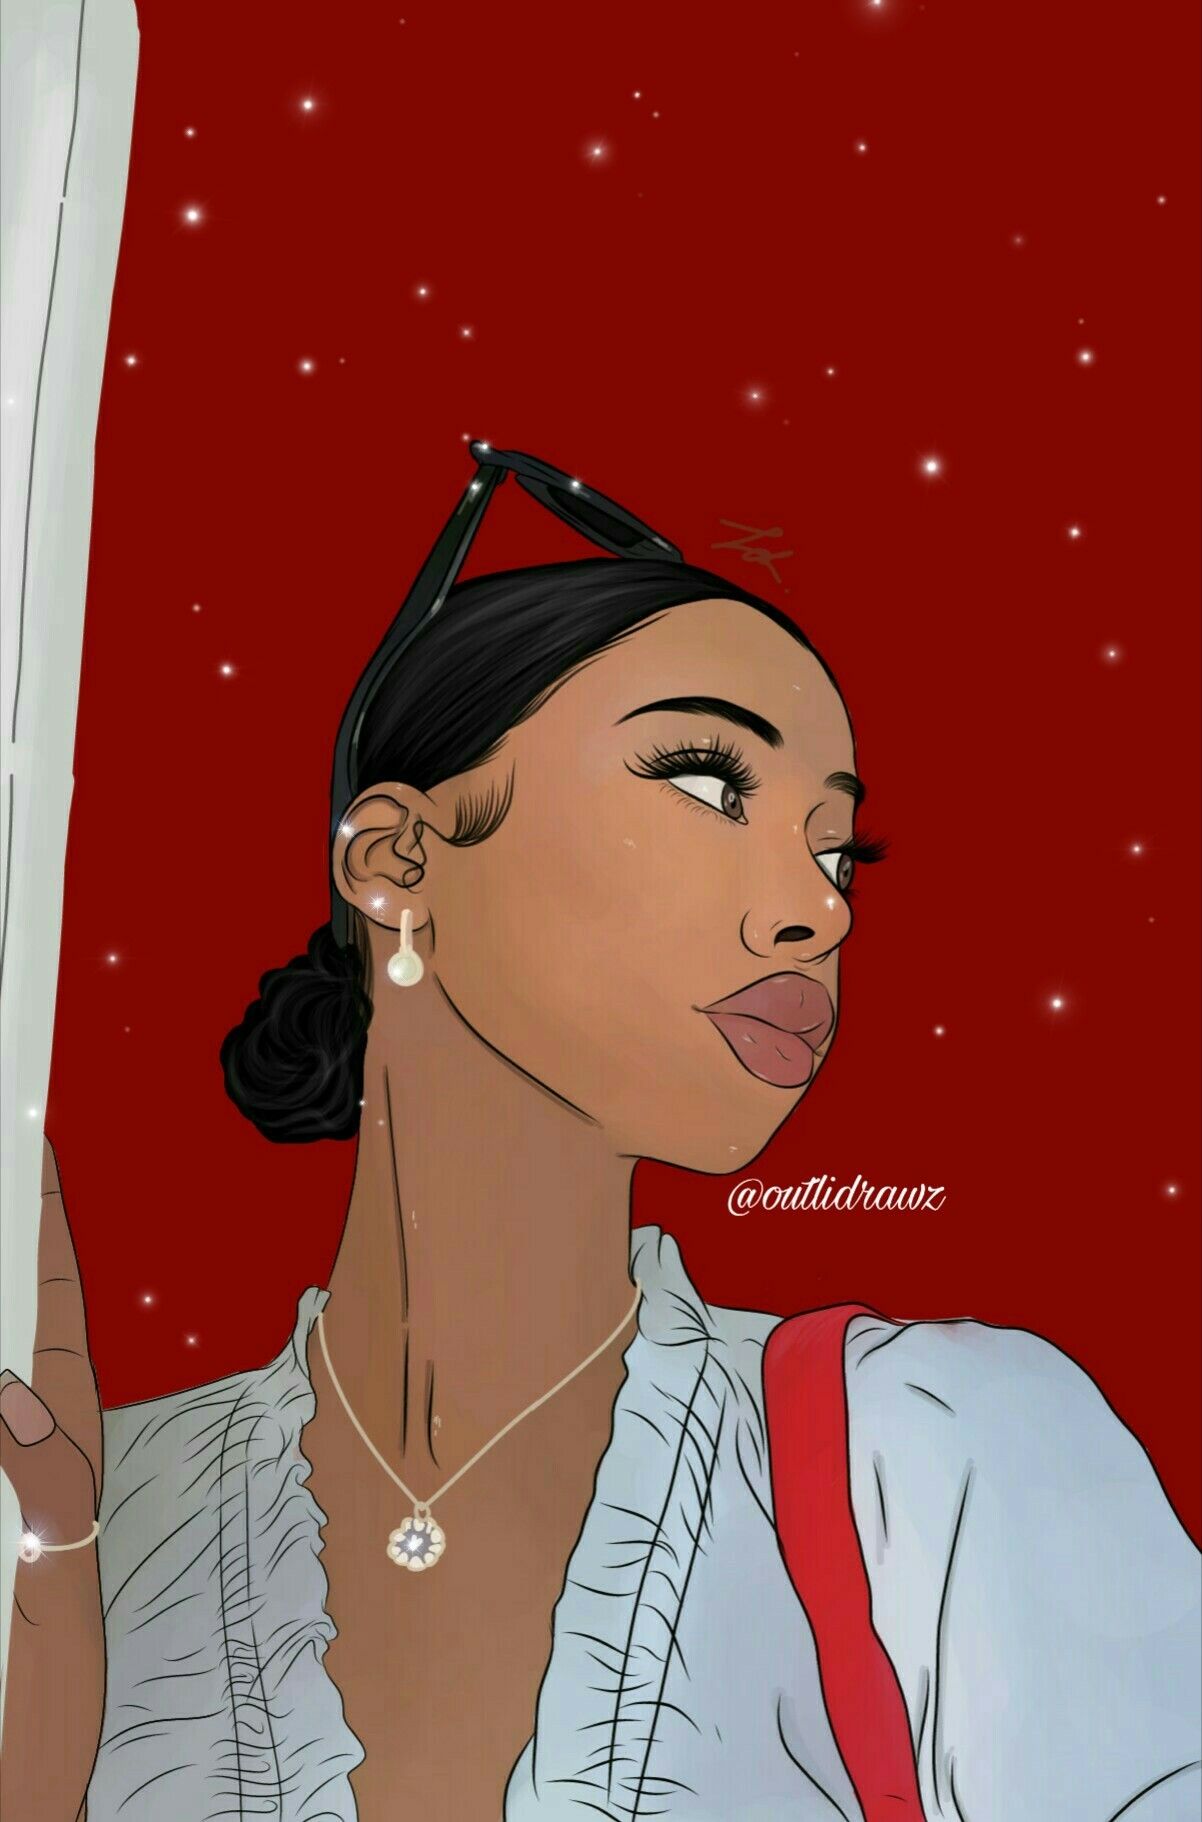 Pretty Black Girl Cartoon Wallpaper